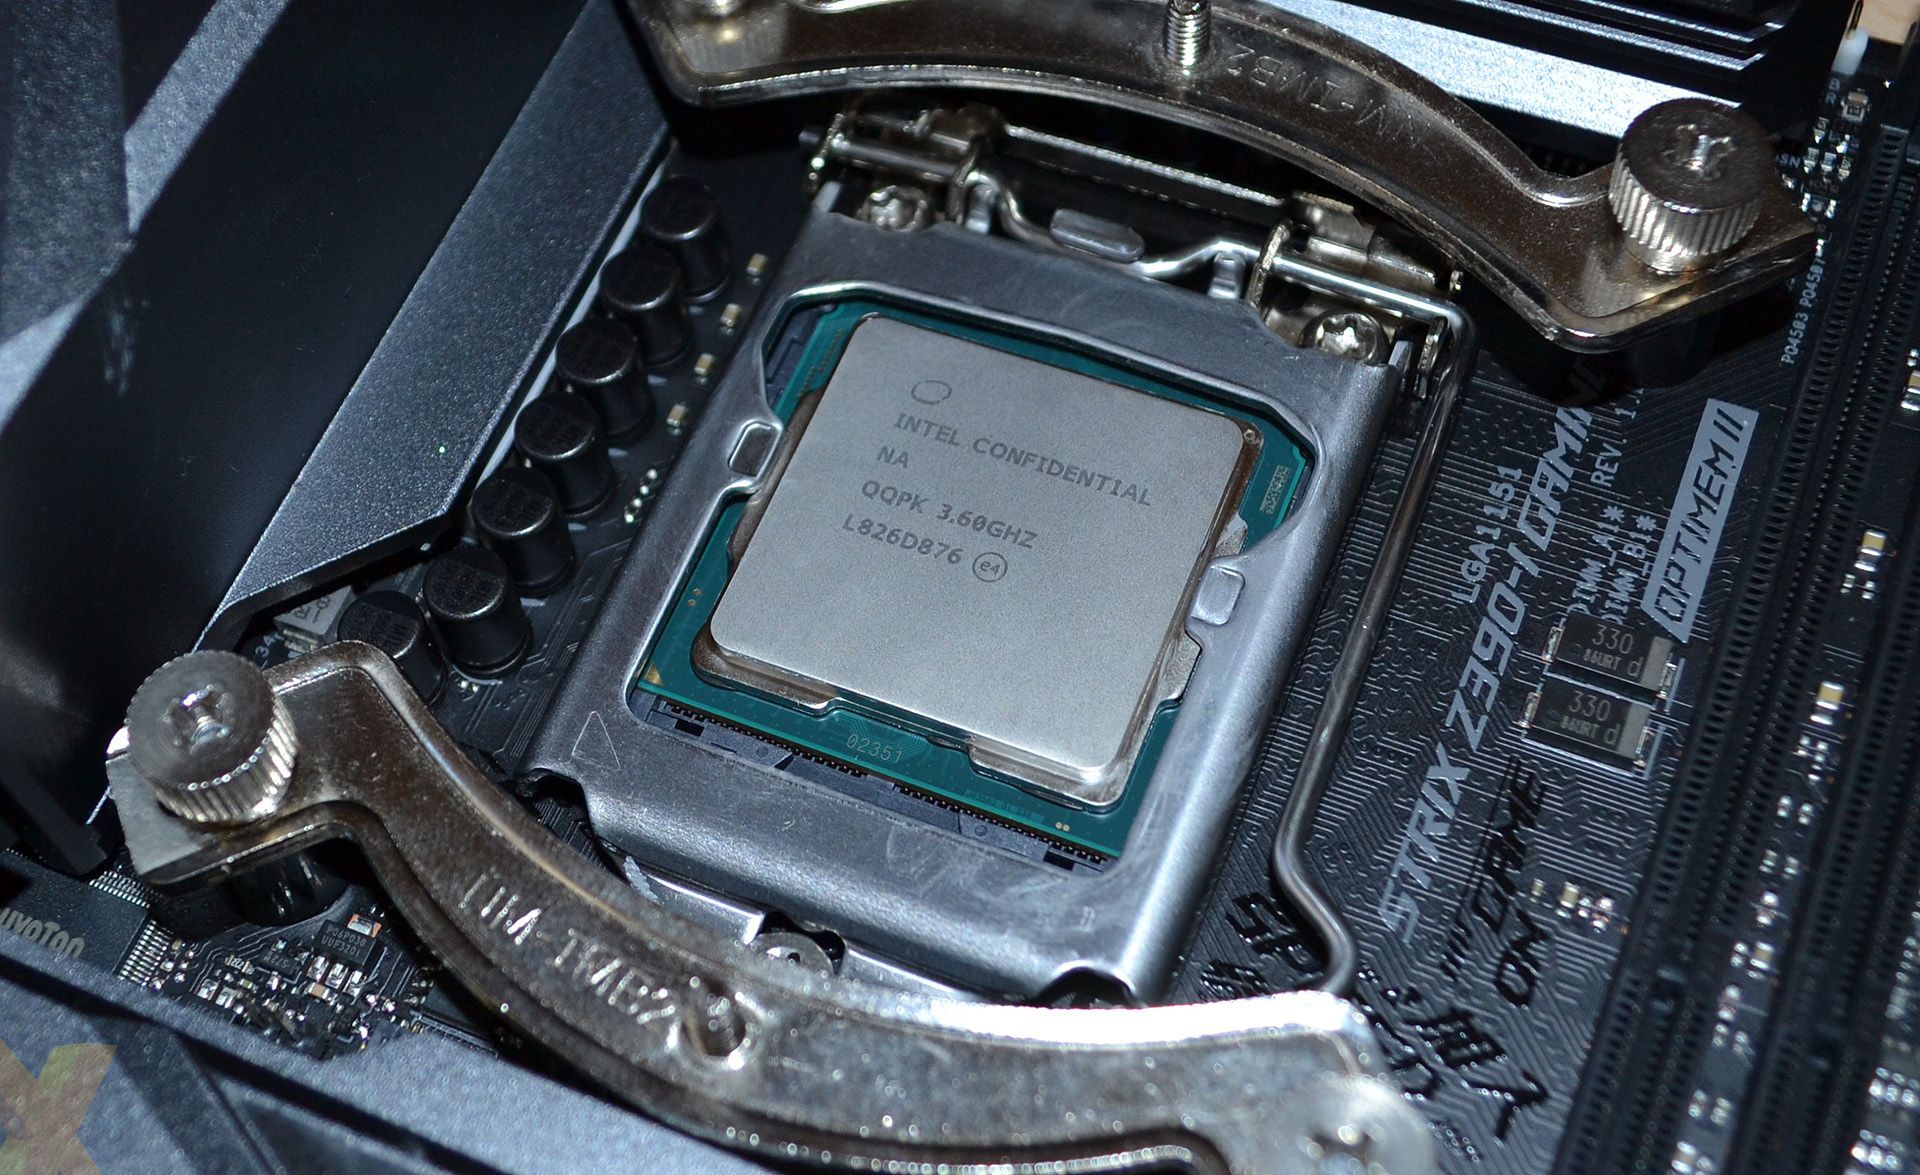 Review: Intel Core i7-9700K - CPU - HEXUS.net